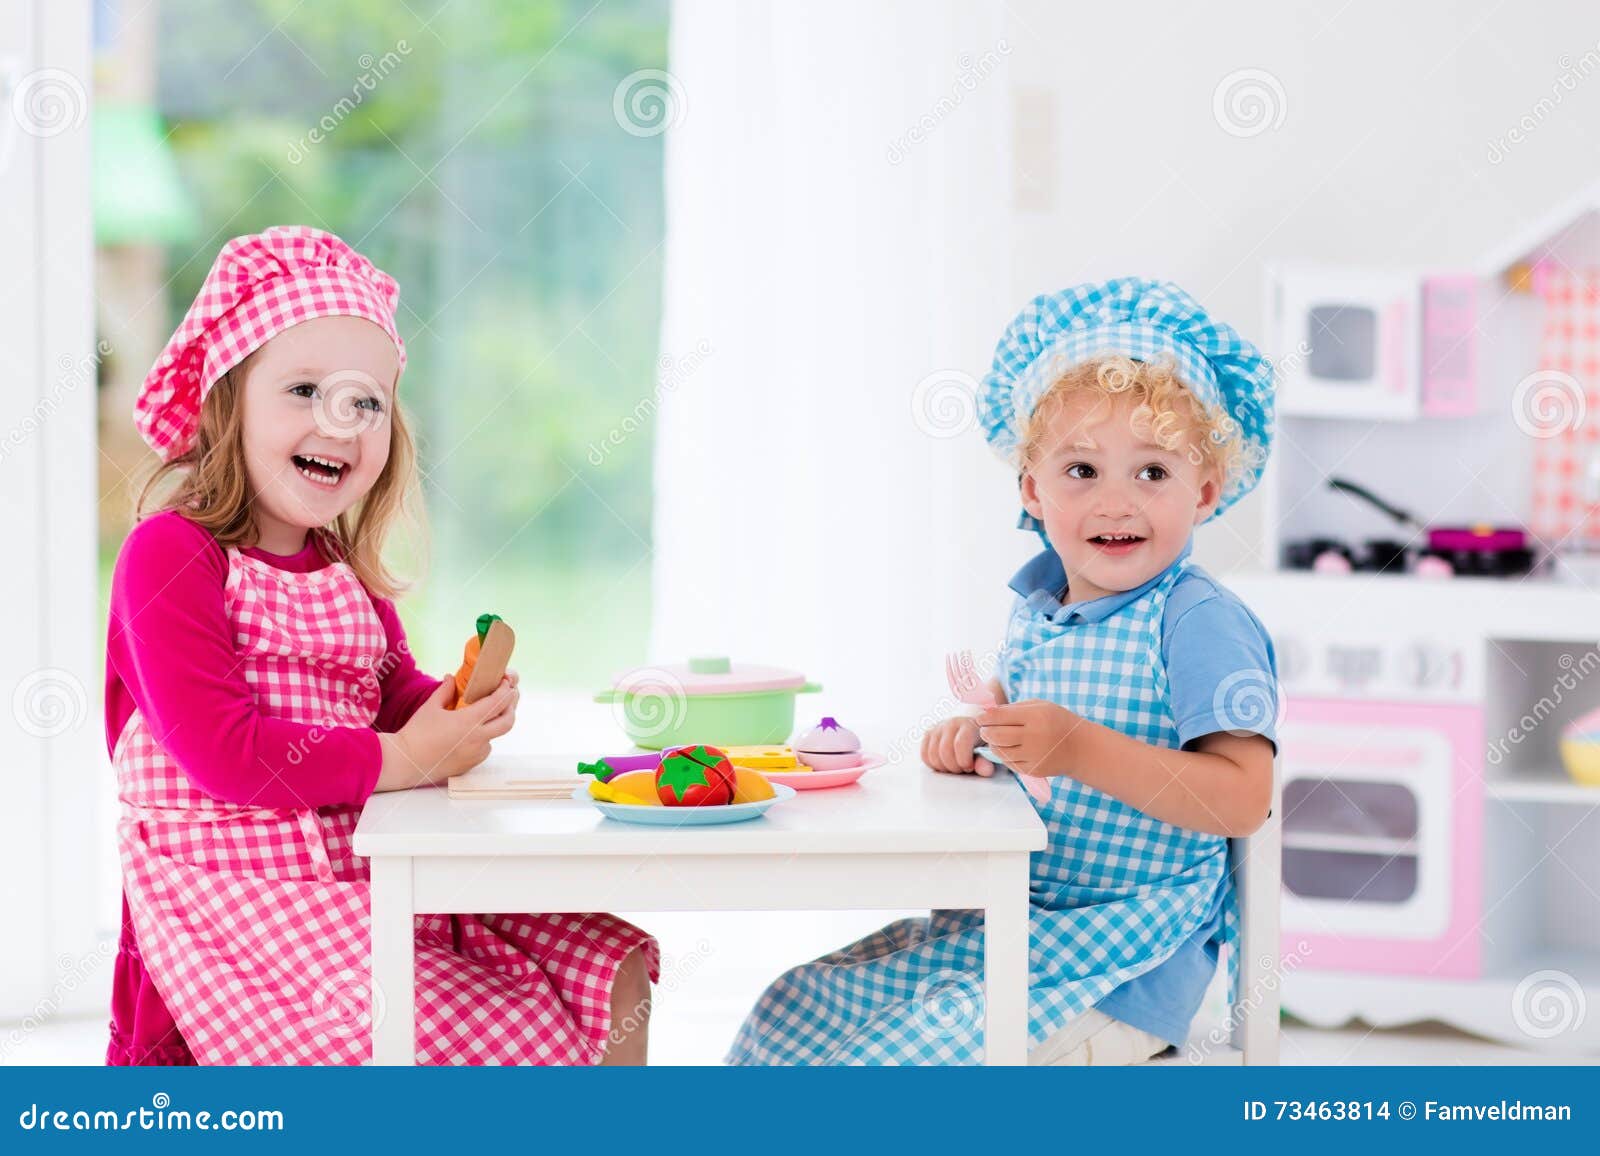 baby girl play kitchen